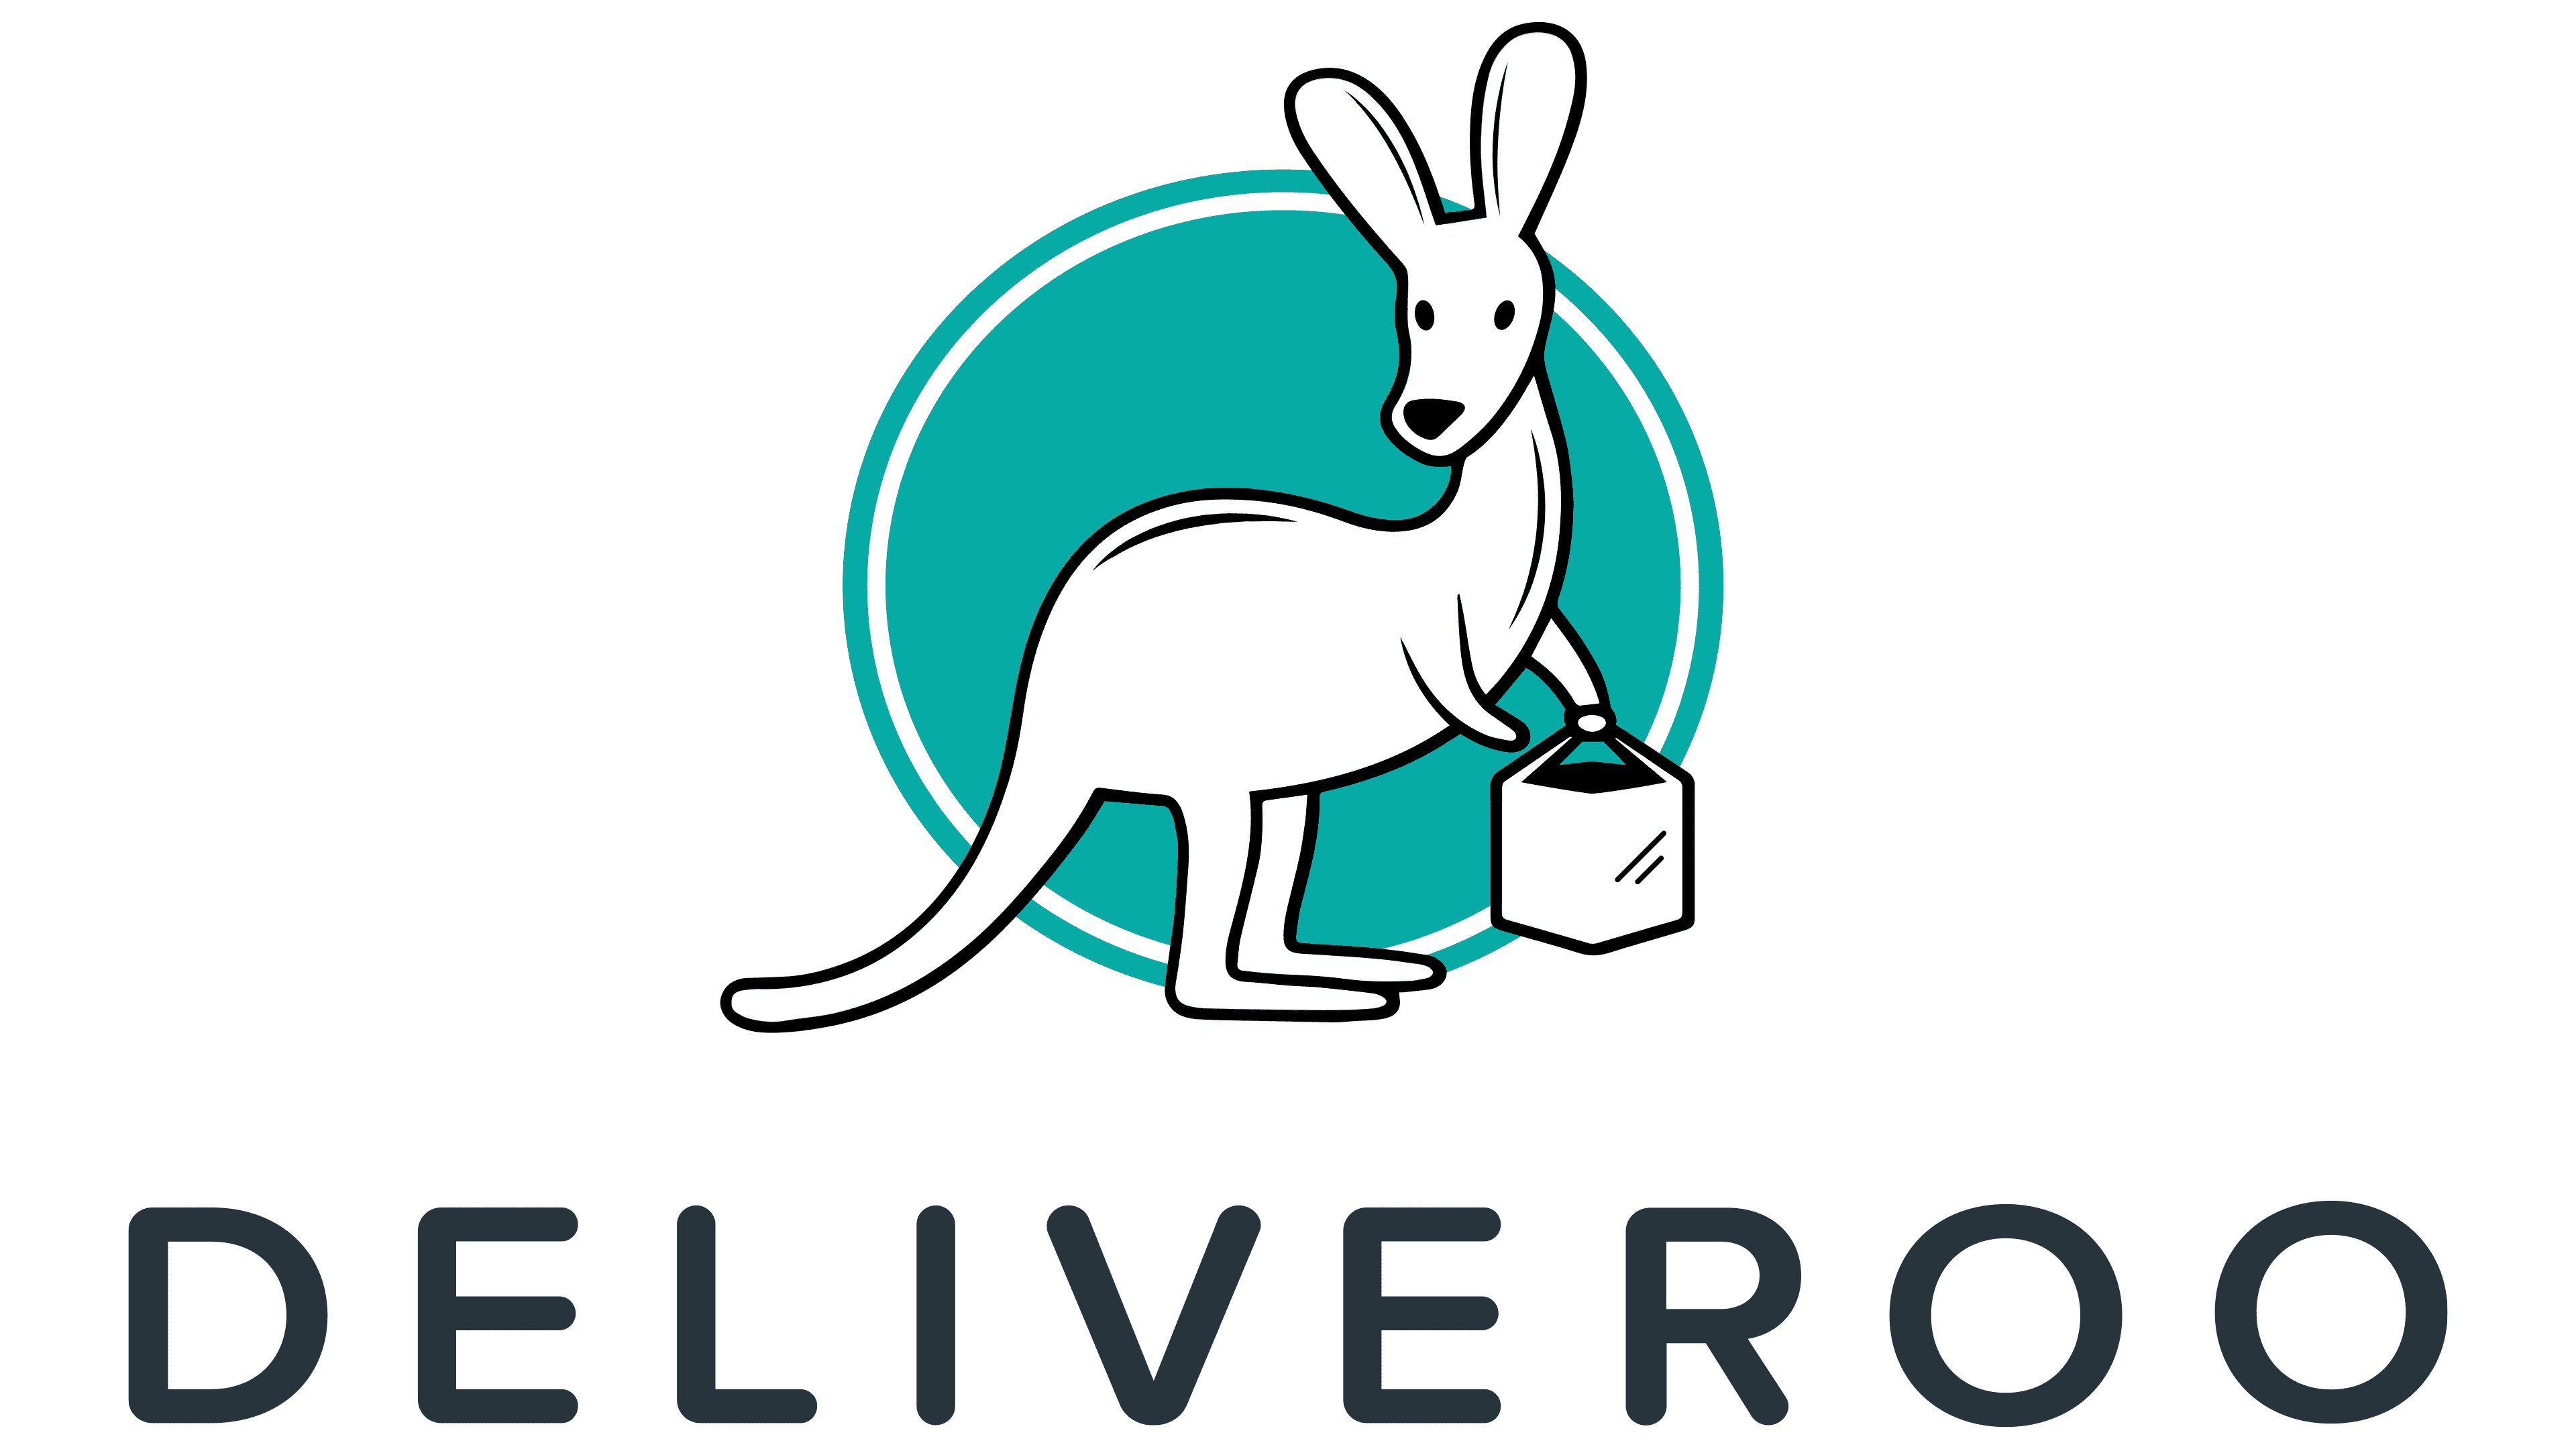 Famous Kangaroo a Logos with Most